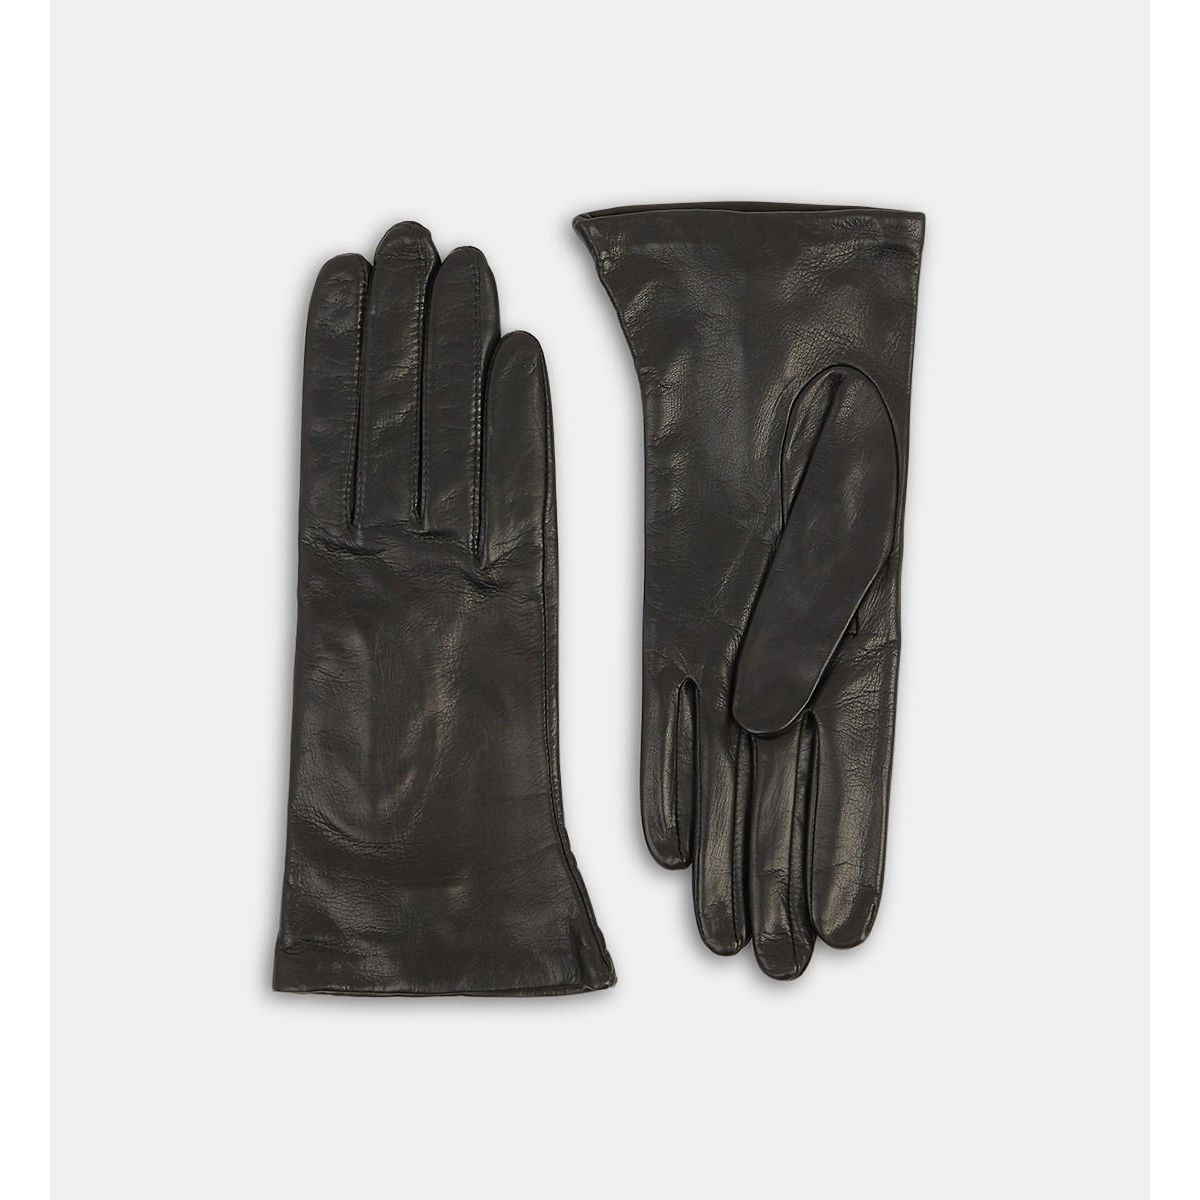 CAMEL Active cuir gants noir 2g33 408330 09 